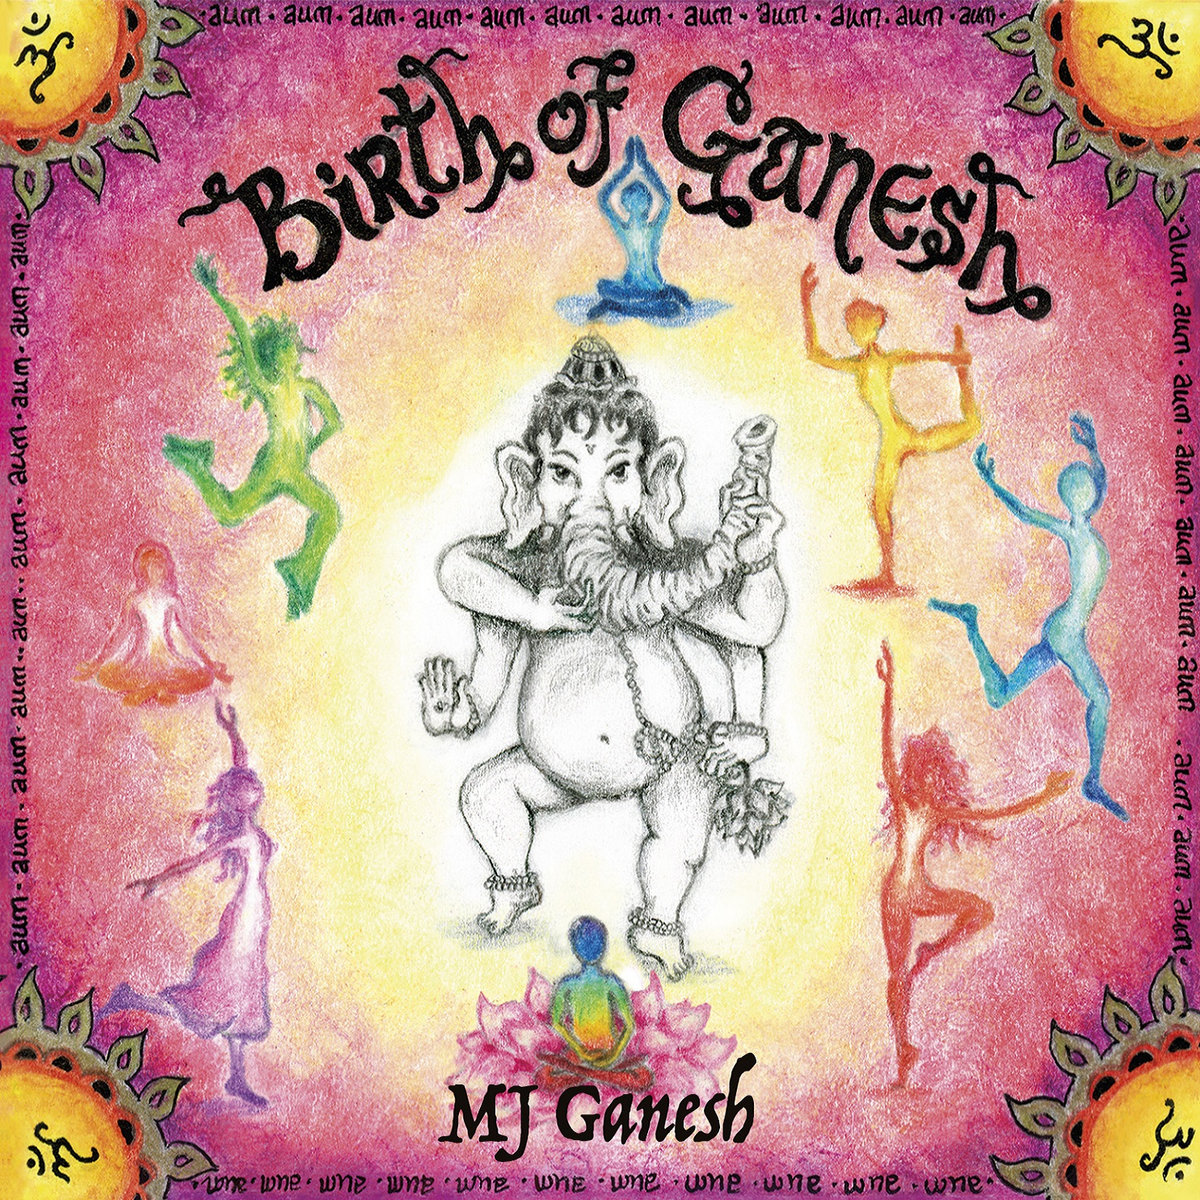 MJ Ganesh- Birth of Ganesh